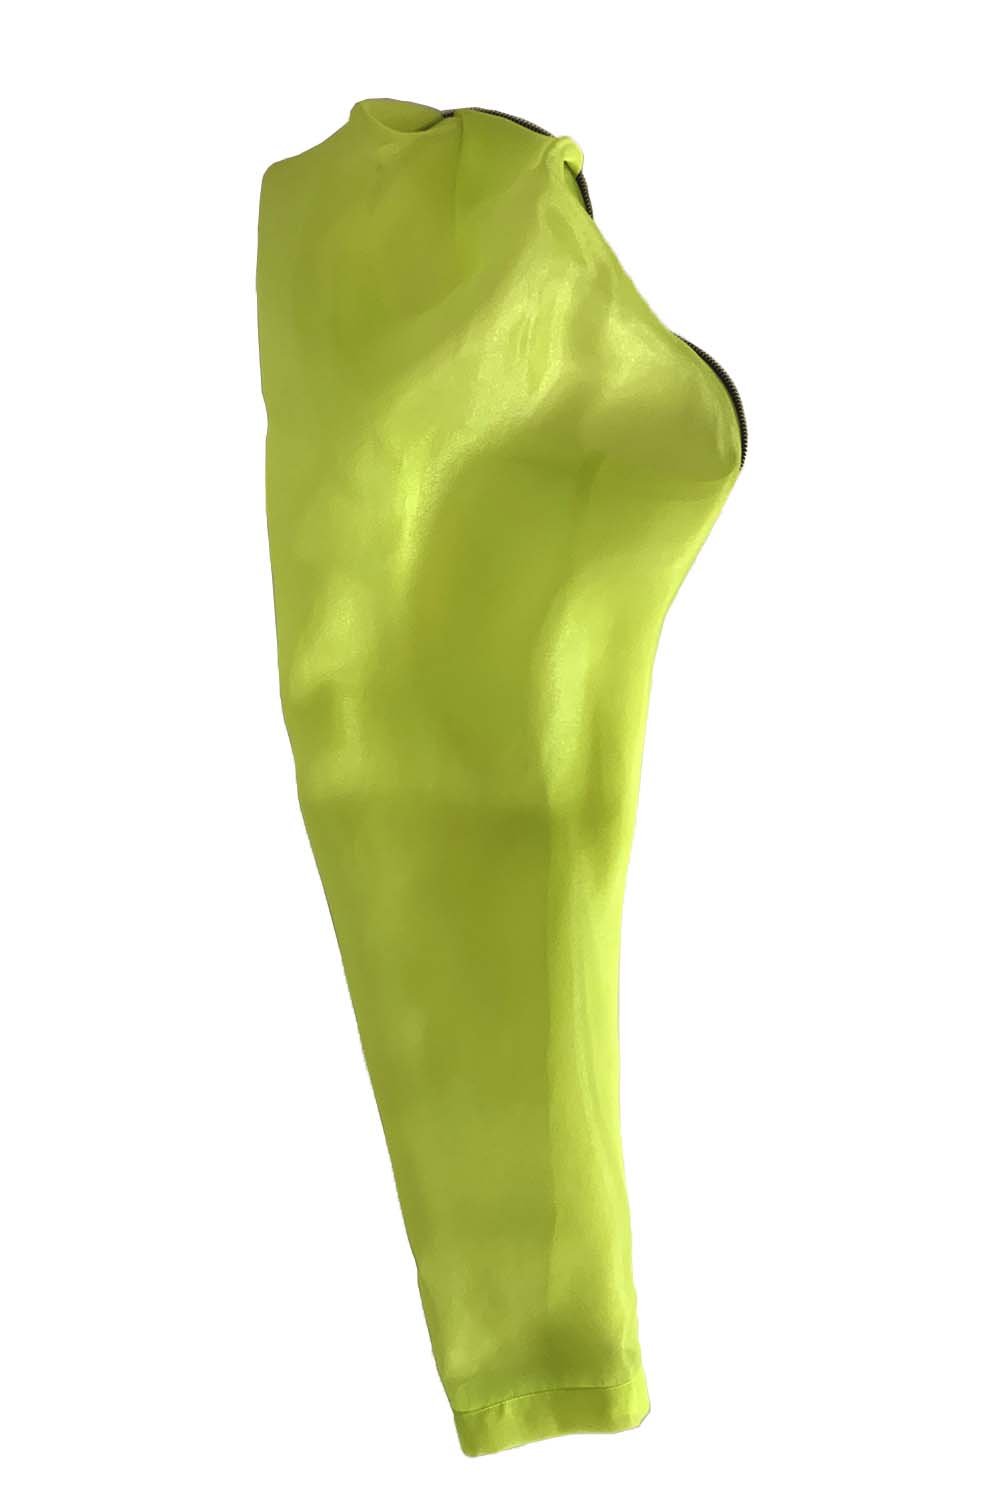 JKT CNSTR, Sleeve Symmetric, Lite Green Lime Organza